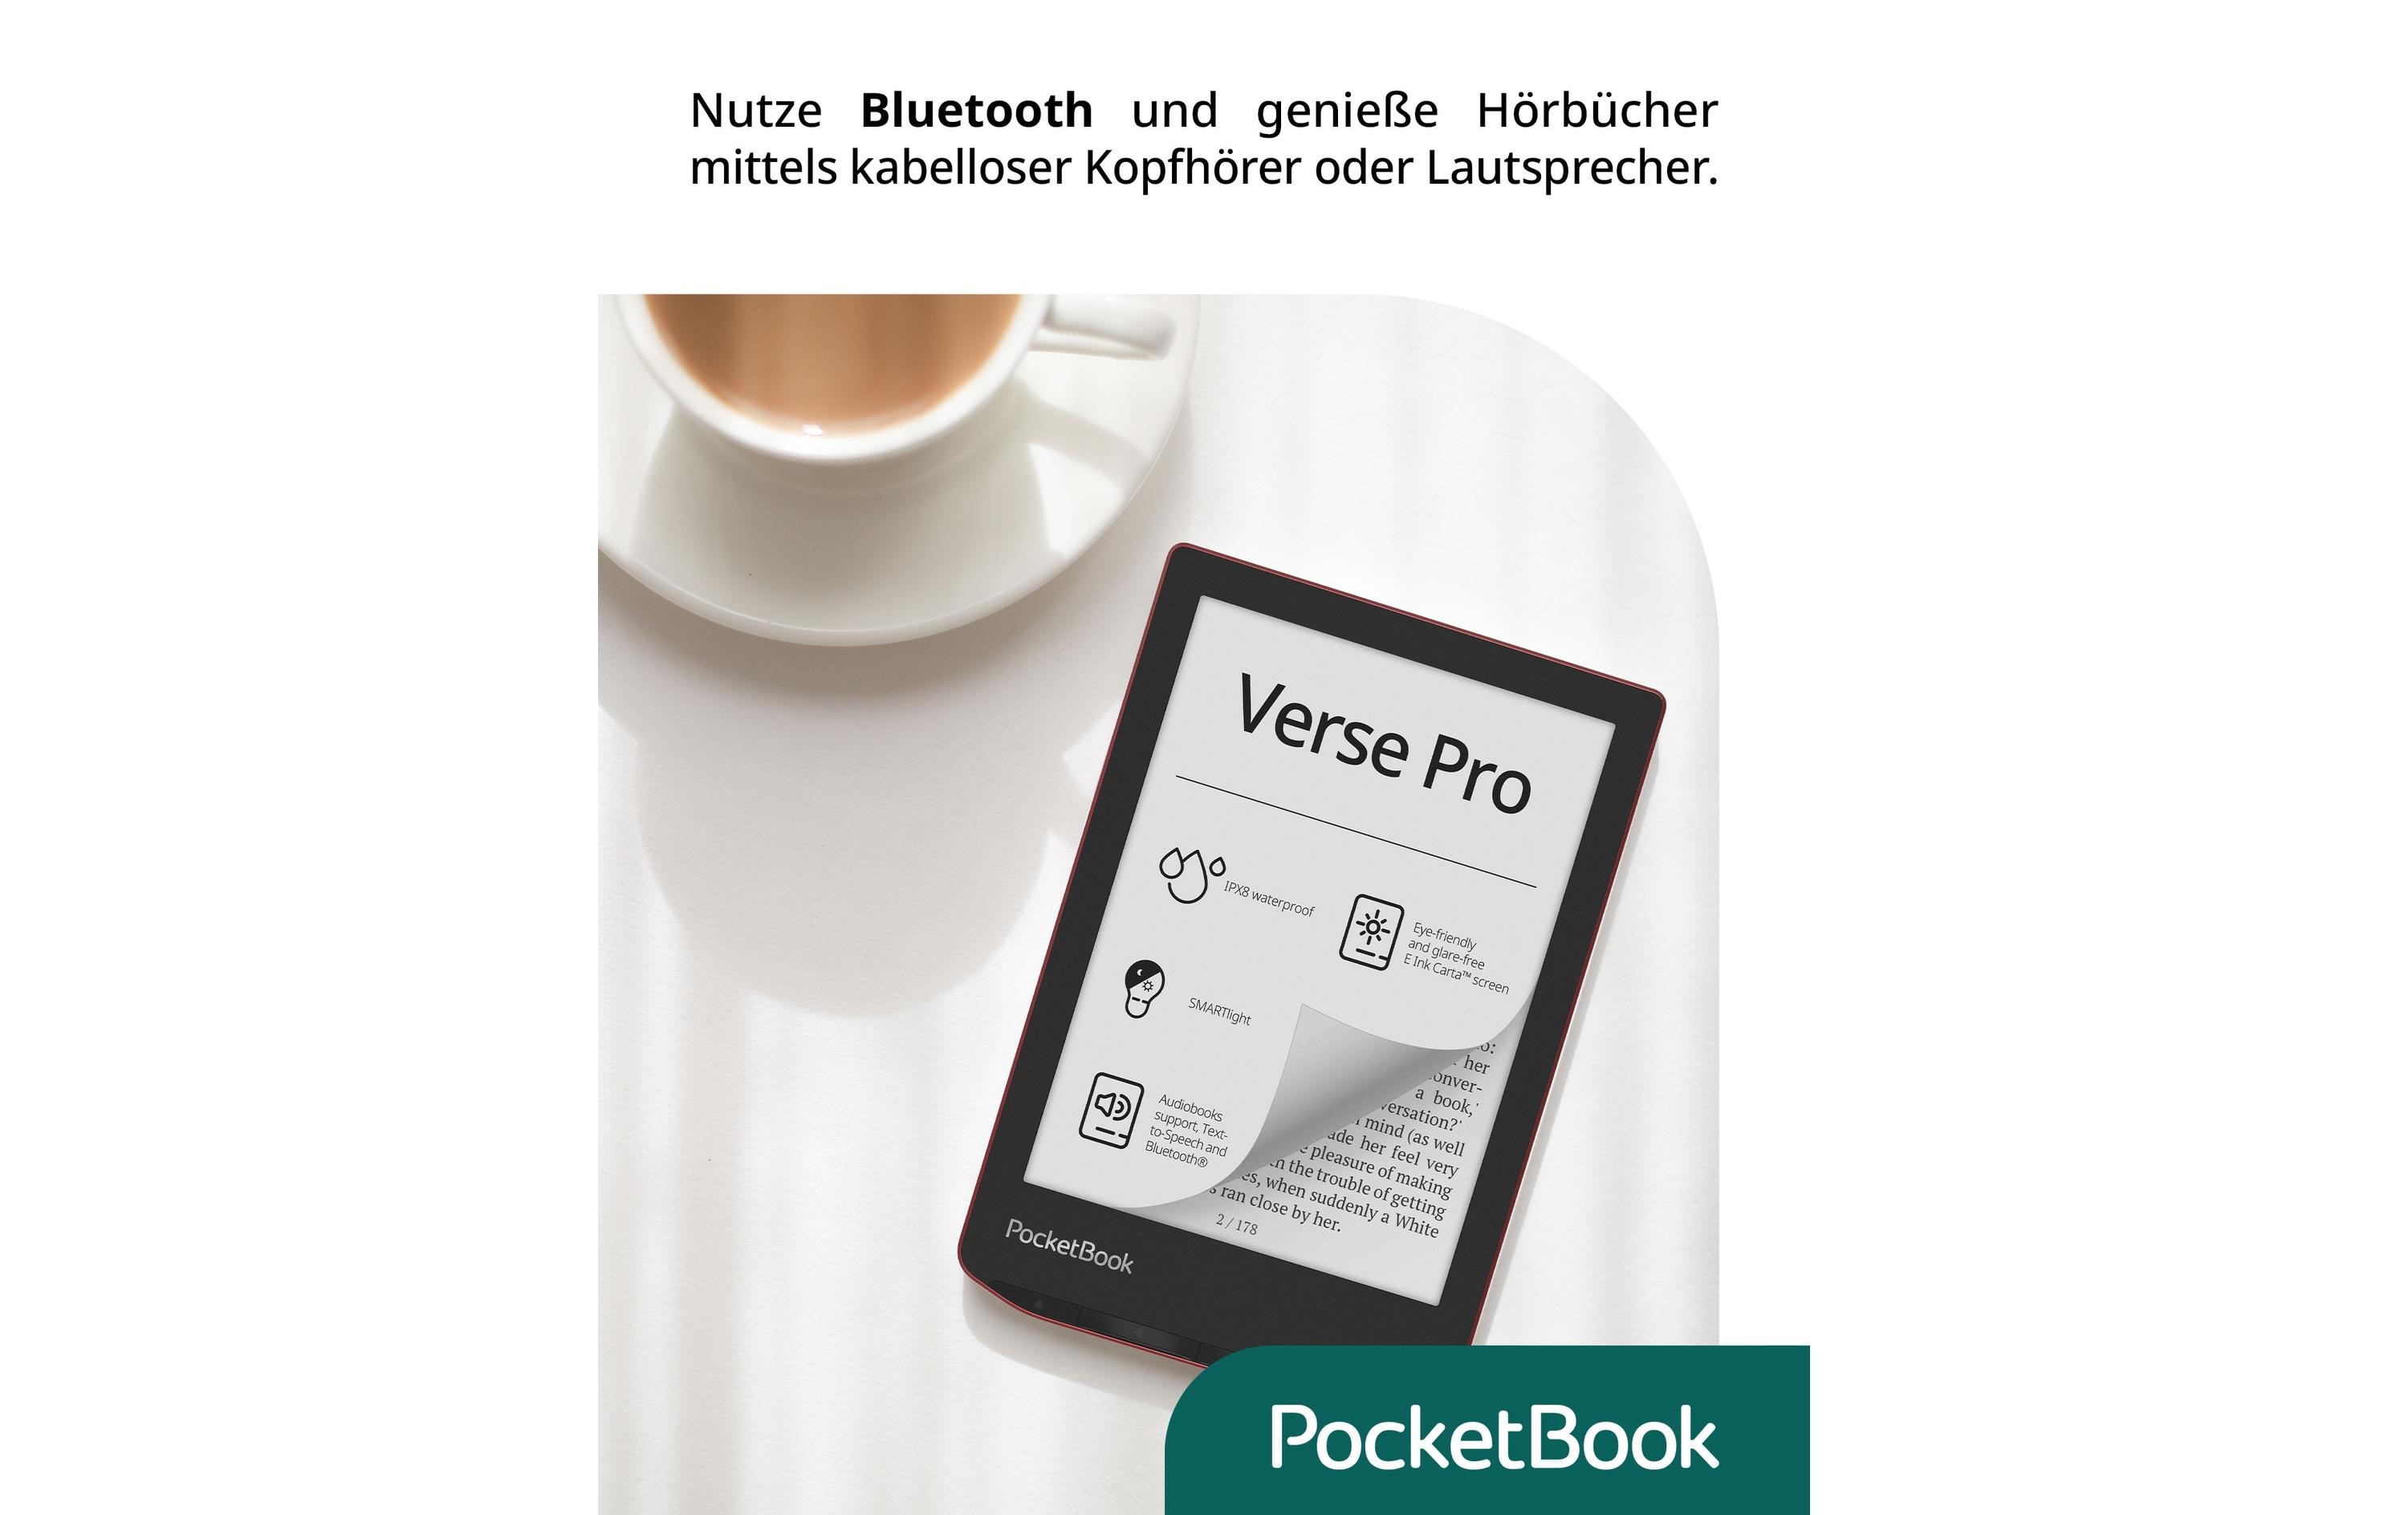 PocketBook E-Book Reader Verse Pro Azure